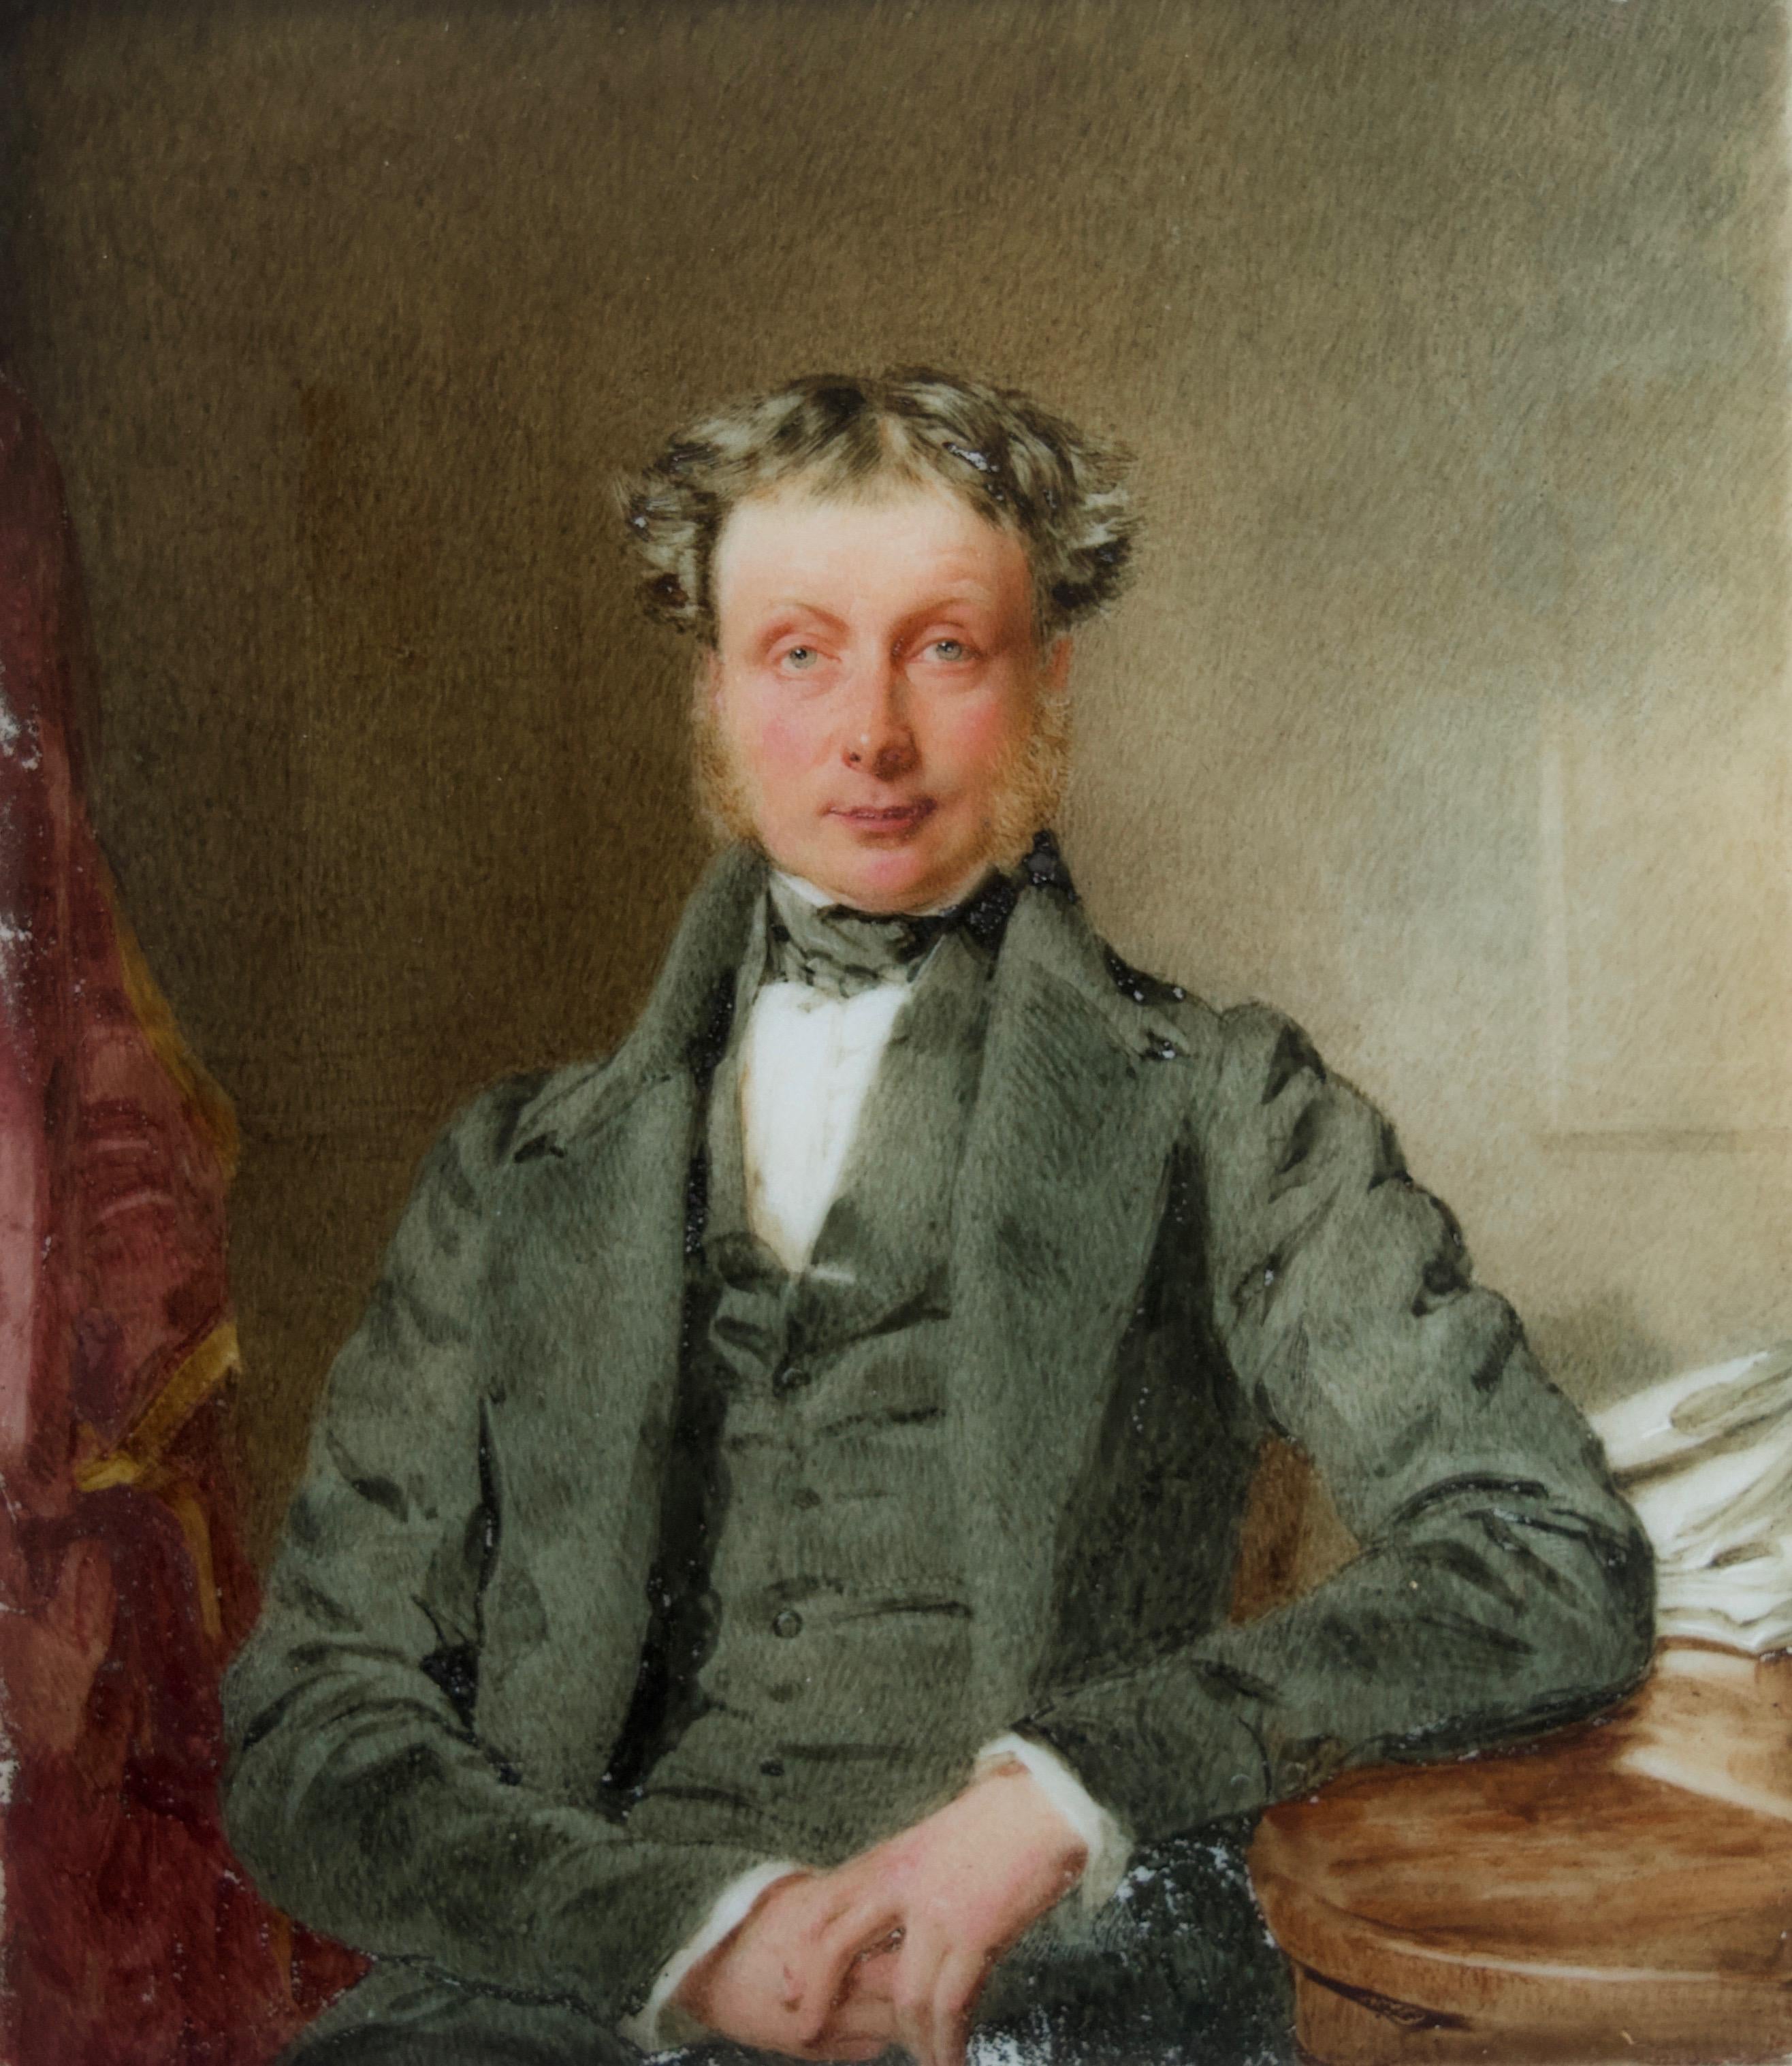 Thomas Heathfield Carrick, Miniature portrait of a gentleman